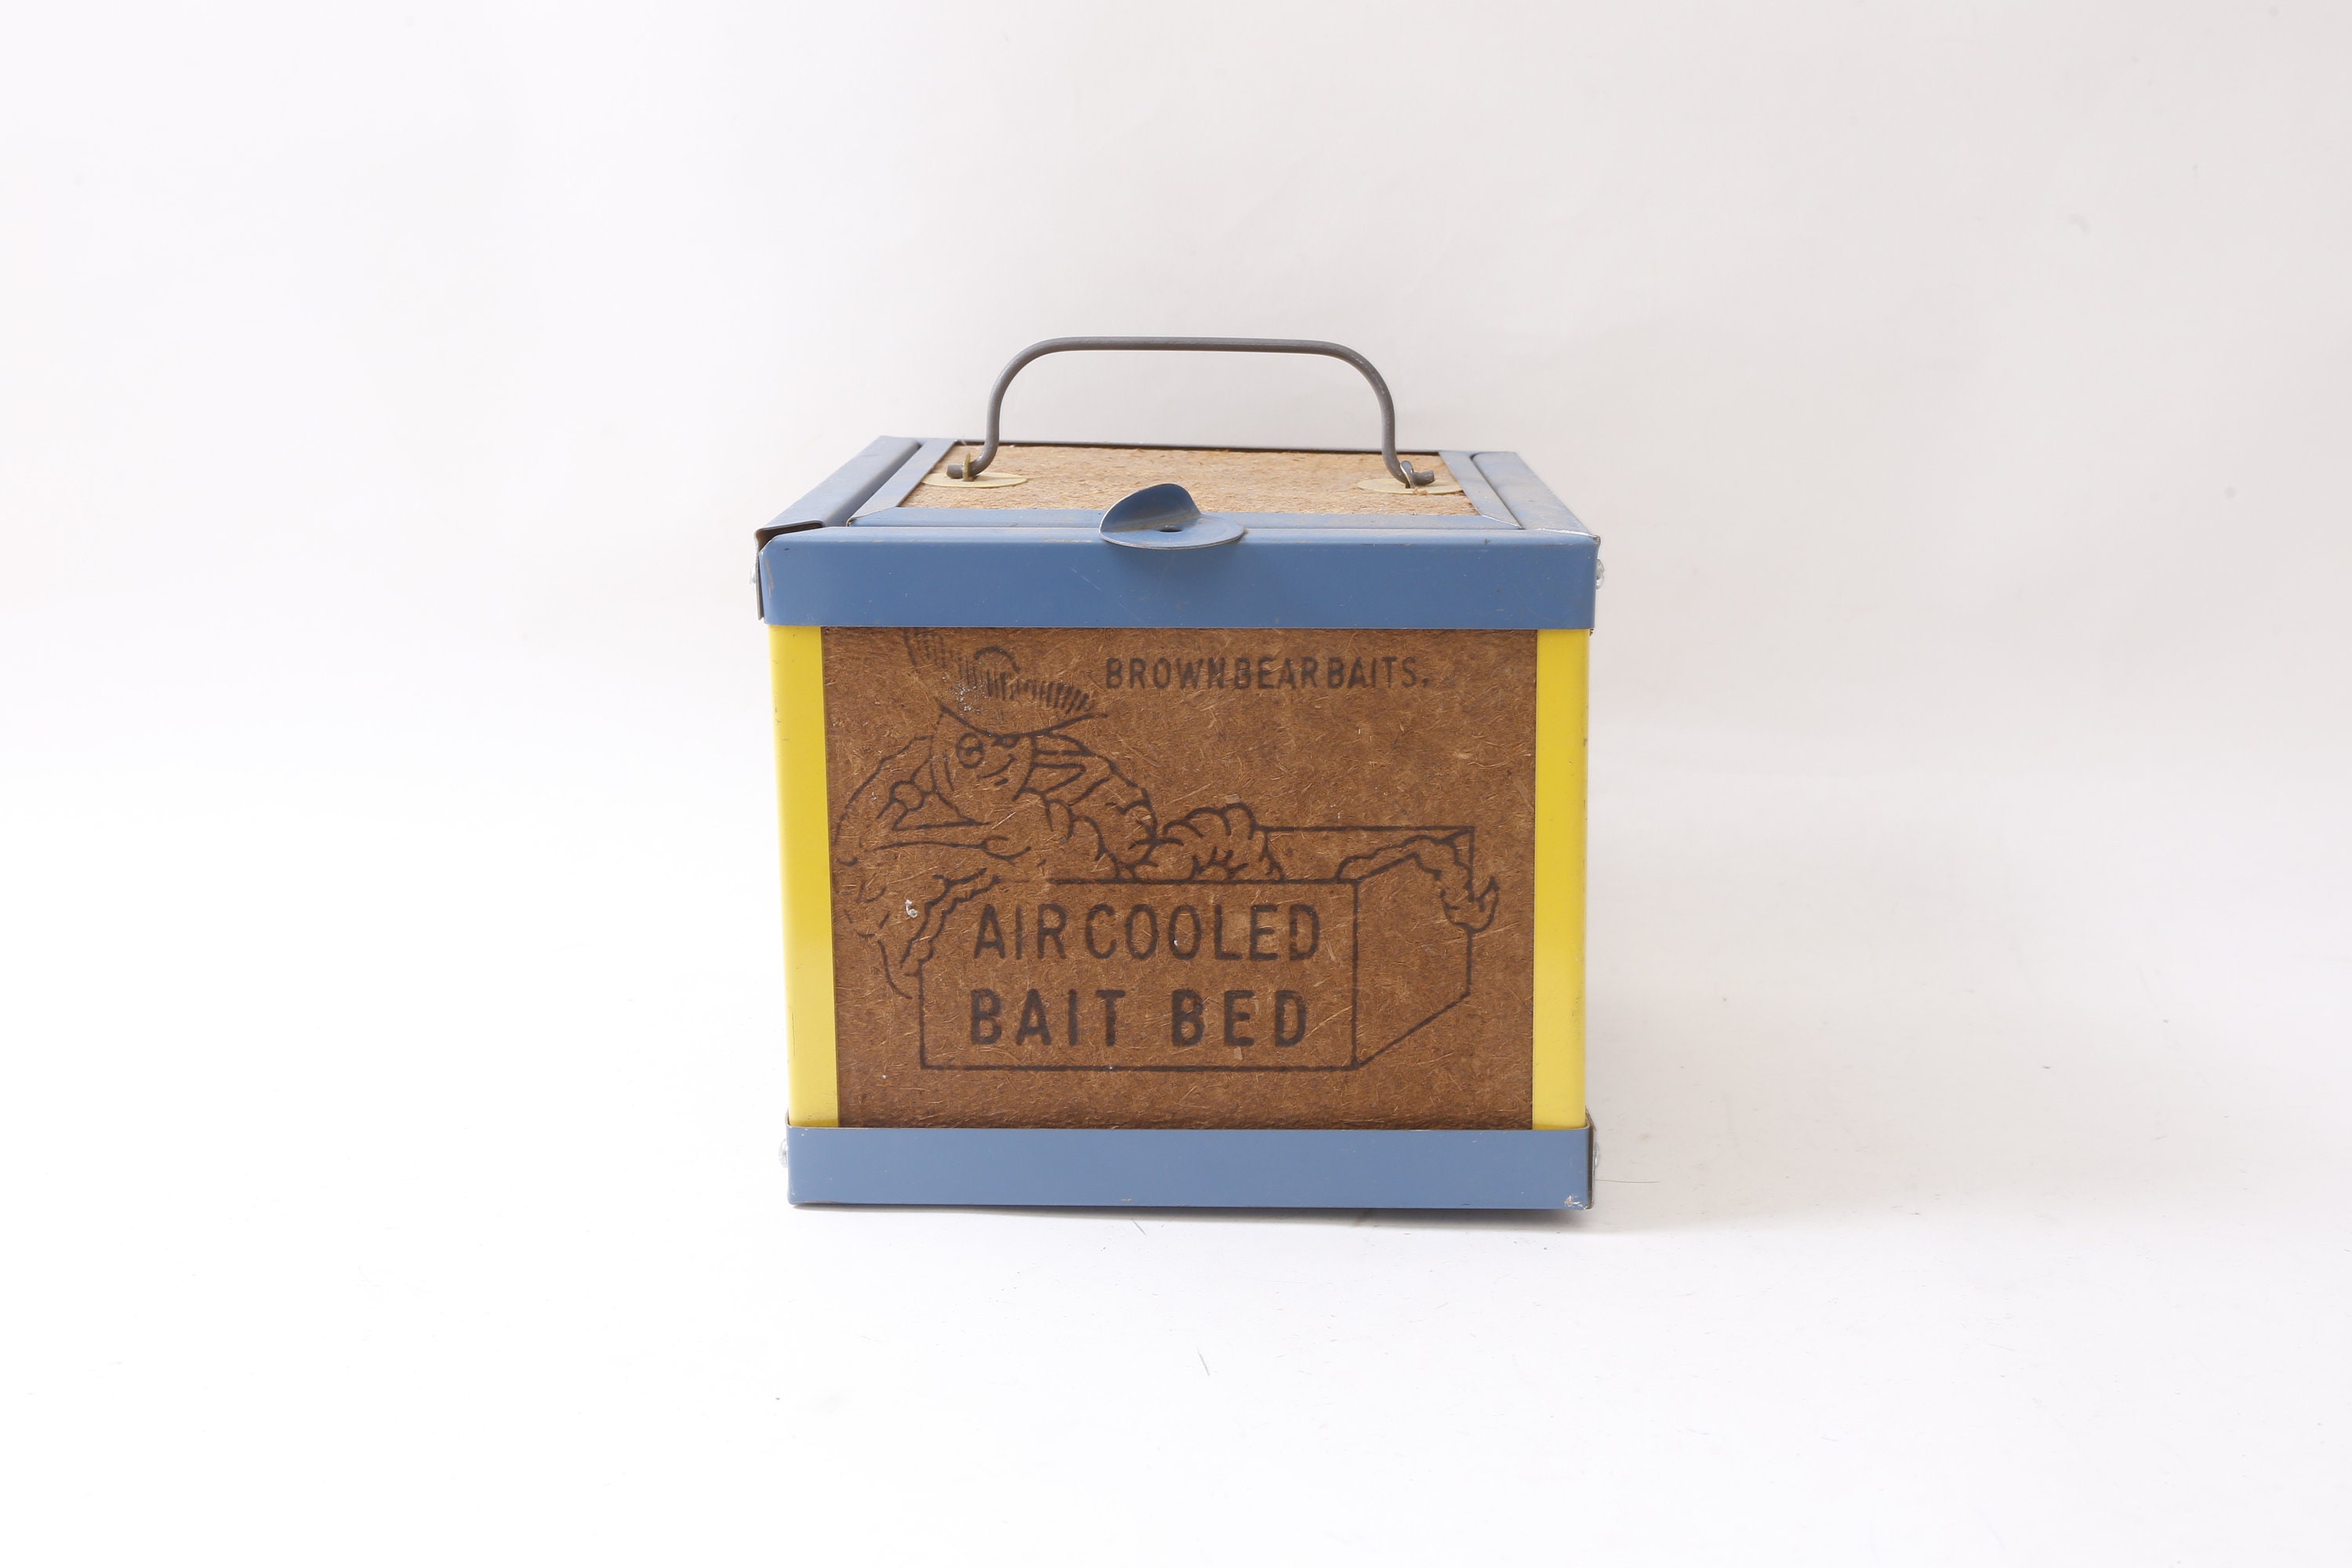 Aircooled Bait Bed, Brown Bear Baits, Box, Storage, Man Cave, Metal, Home,  Interior, Decor, Vintage, 20-19-668 -  Canada